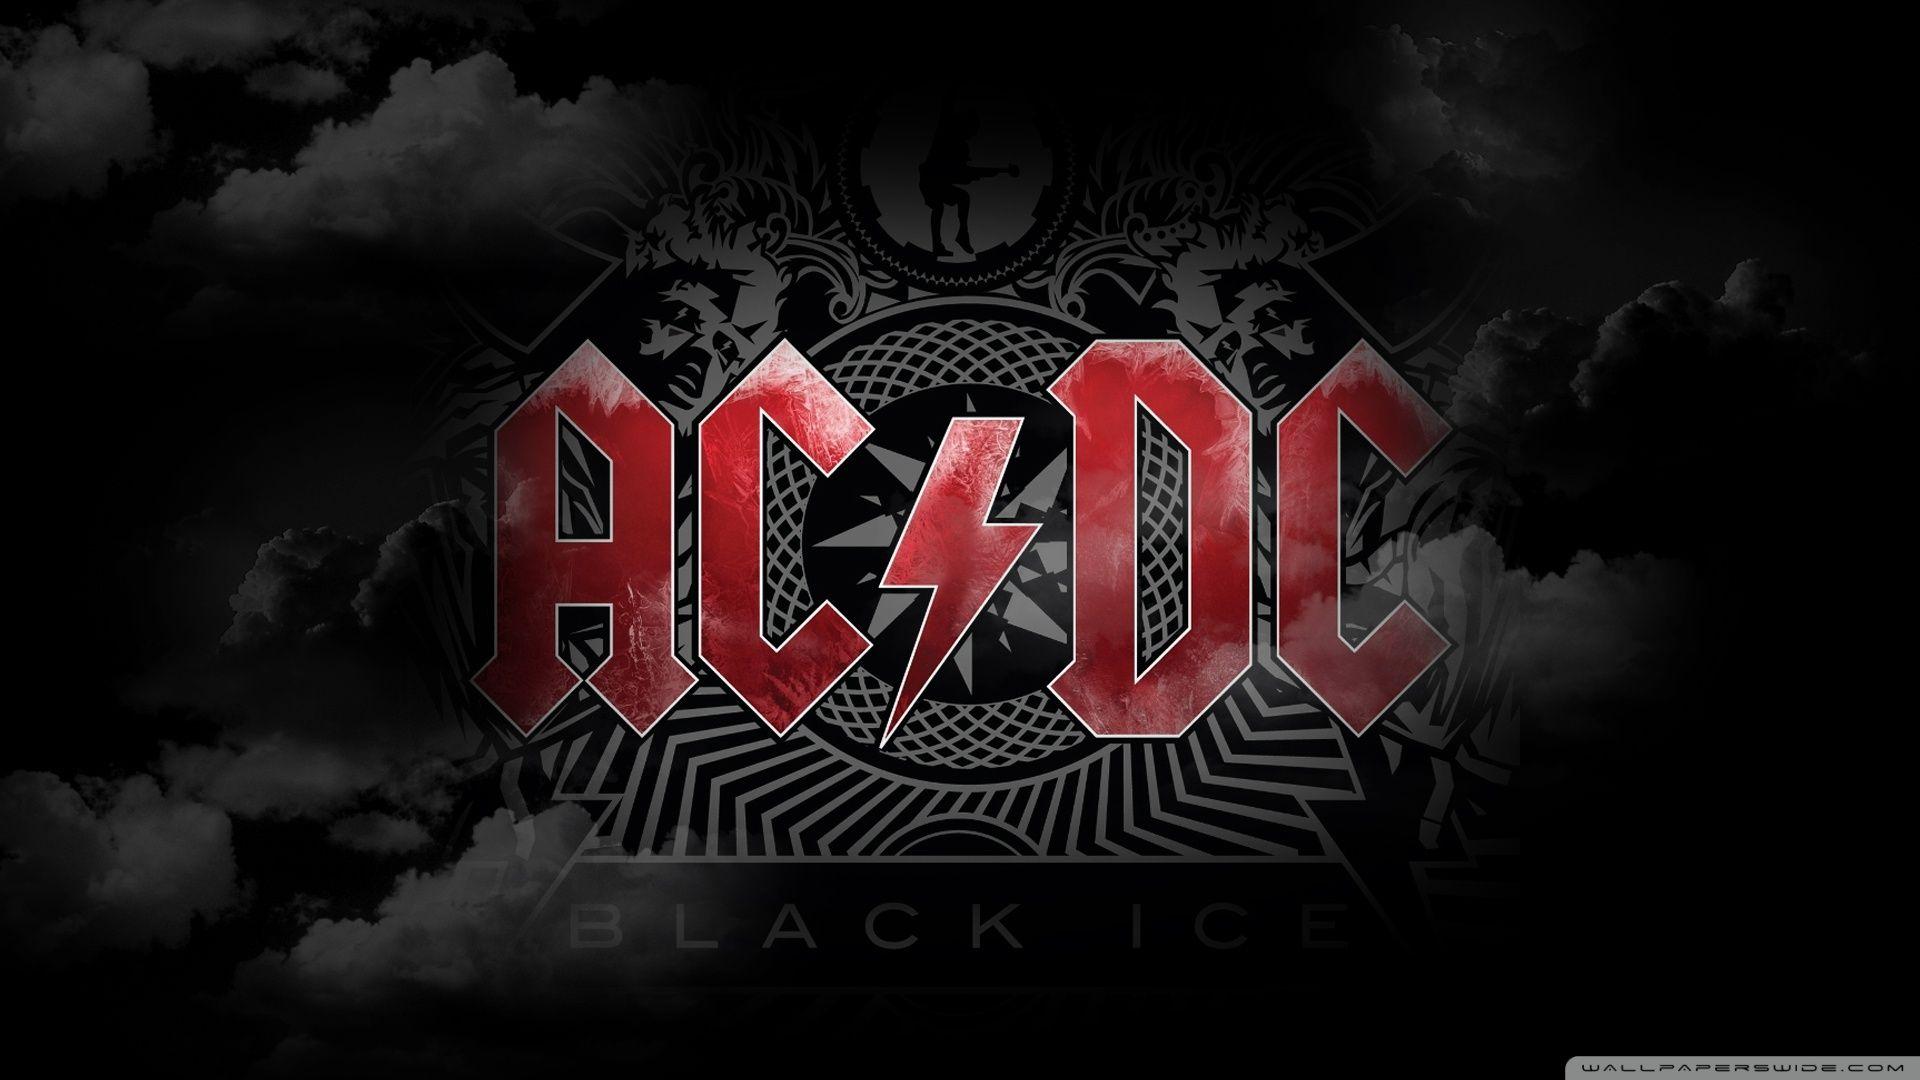 AC DC Black Ice. VIP Wallpaper. HD Wallpaper For Desktop